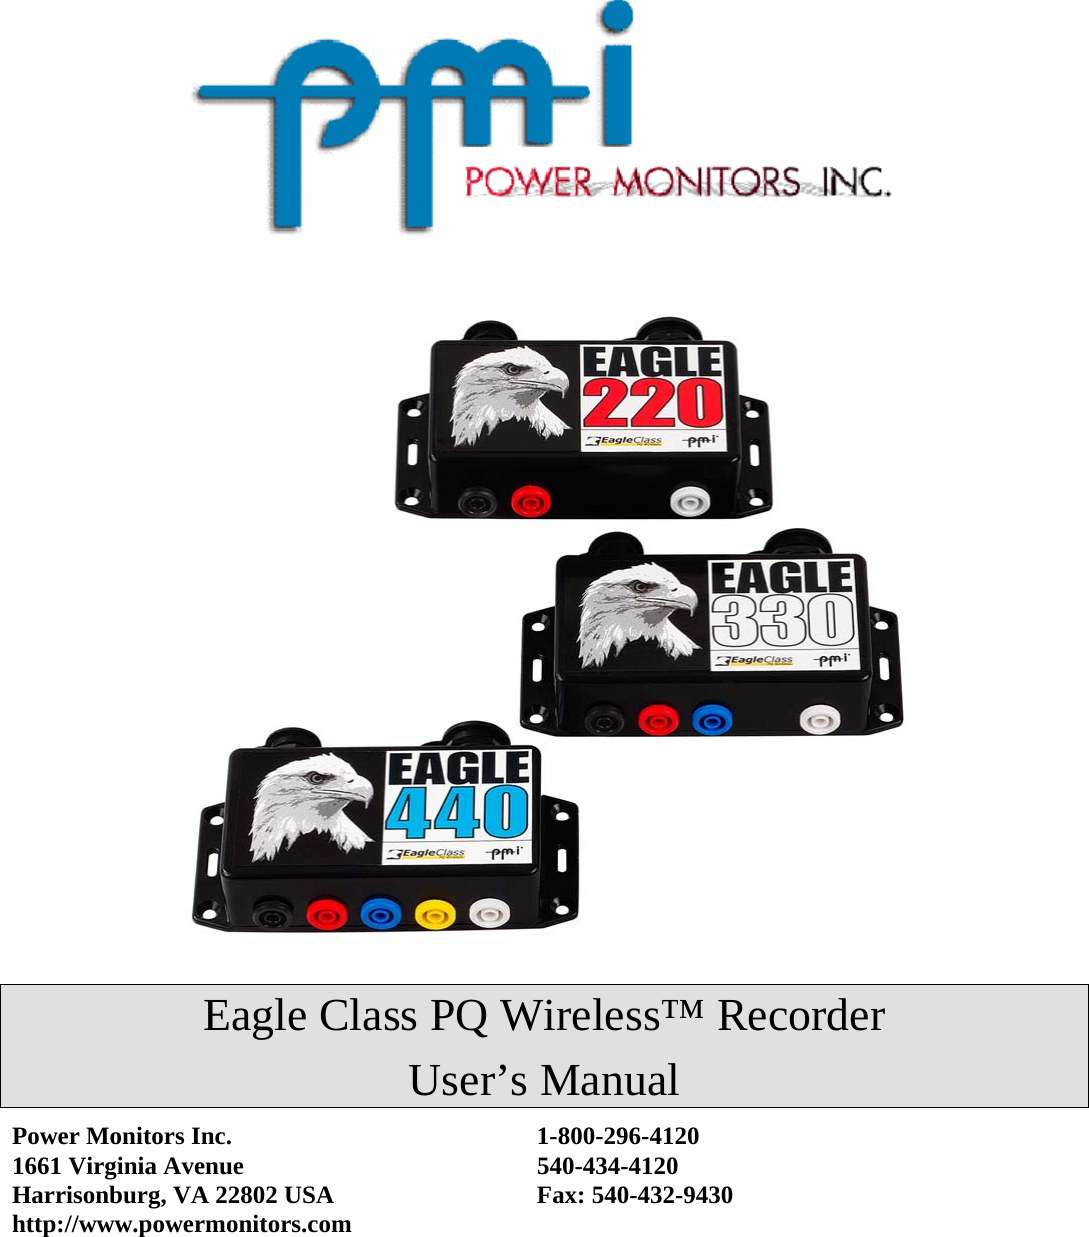     Eagle Class PQ Wireless™ Recorder User’s Manual Power Monitors Inc.         1-800-296-4120 1661 Virginia Avenue    540-434-4120 Harrisonburg, VA 22802 USA      Fax: 540-432-9430 http://www.powermonitors.com